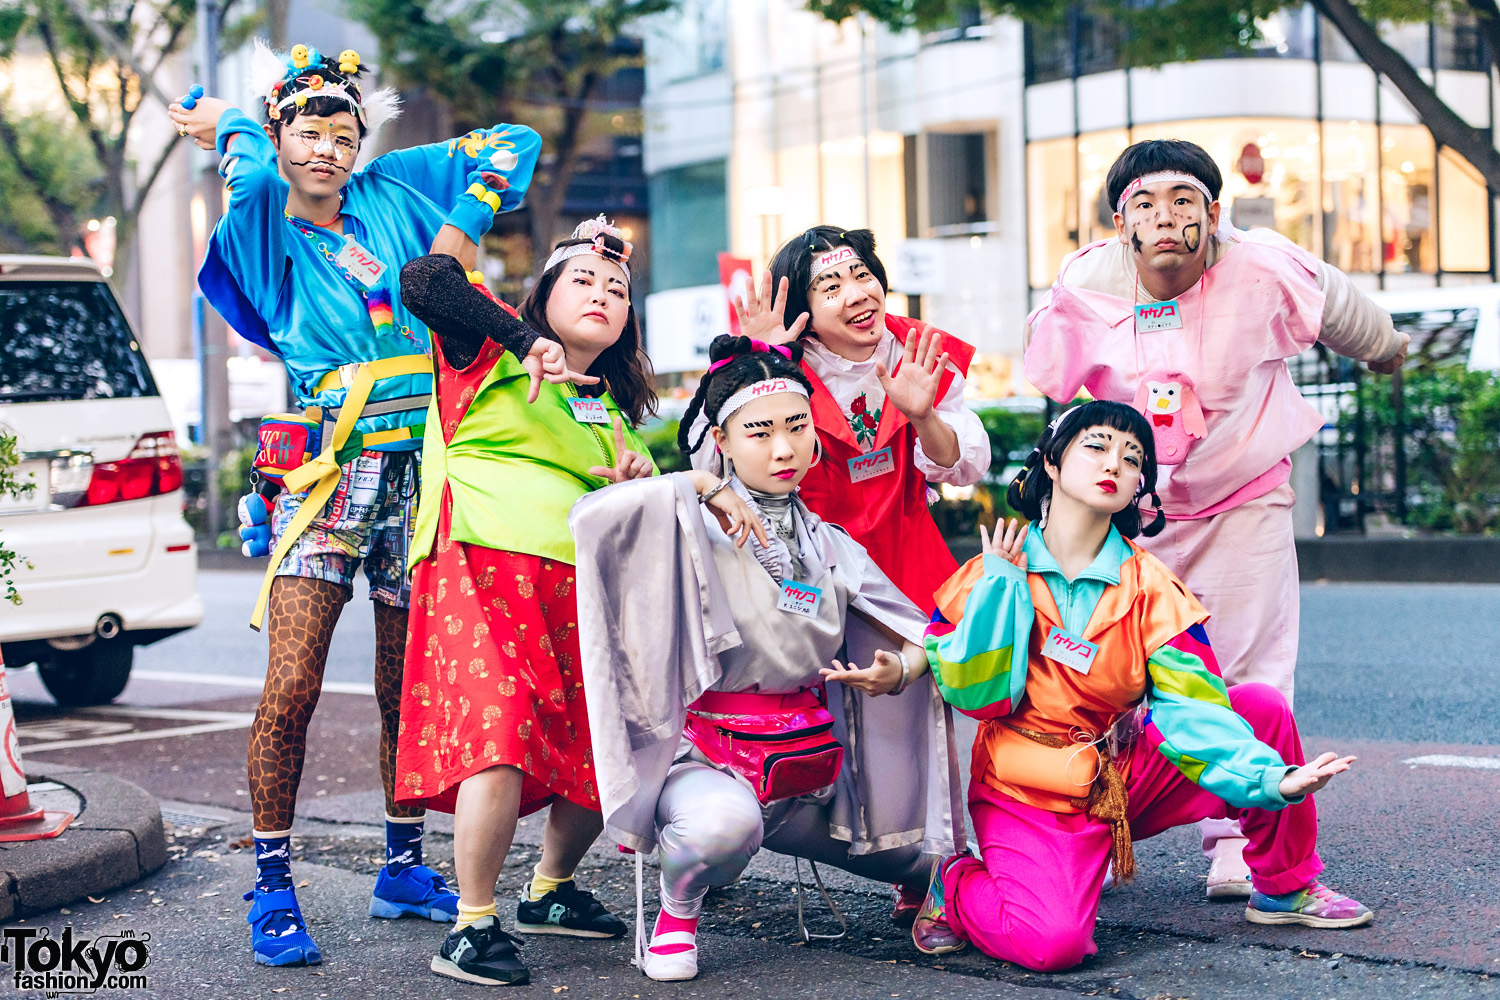 Kekenoke Performance Art Group in Colorful Handmade & Remake Styles Inspired by 1980s Harajuku Fashion